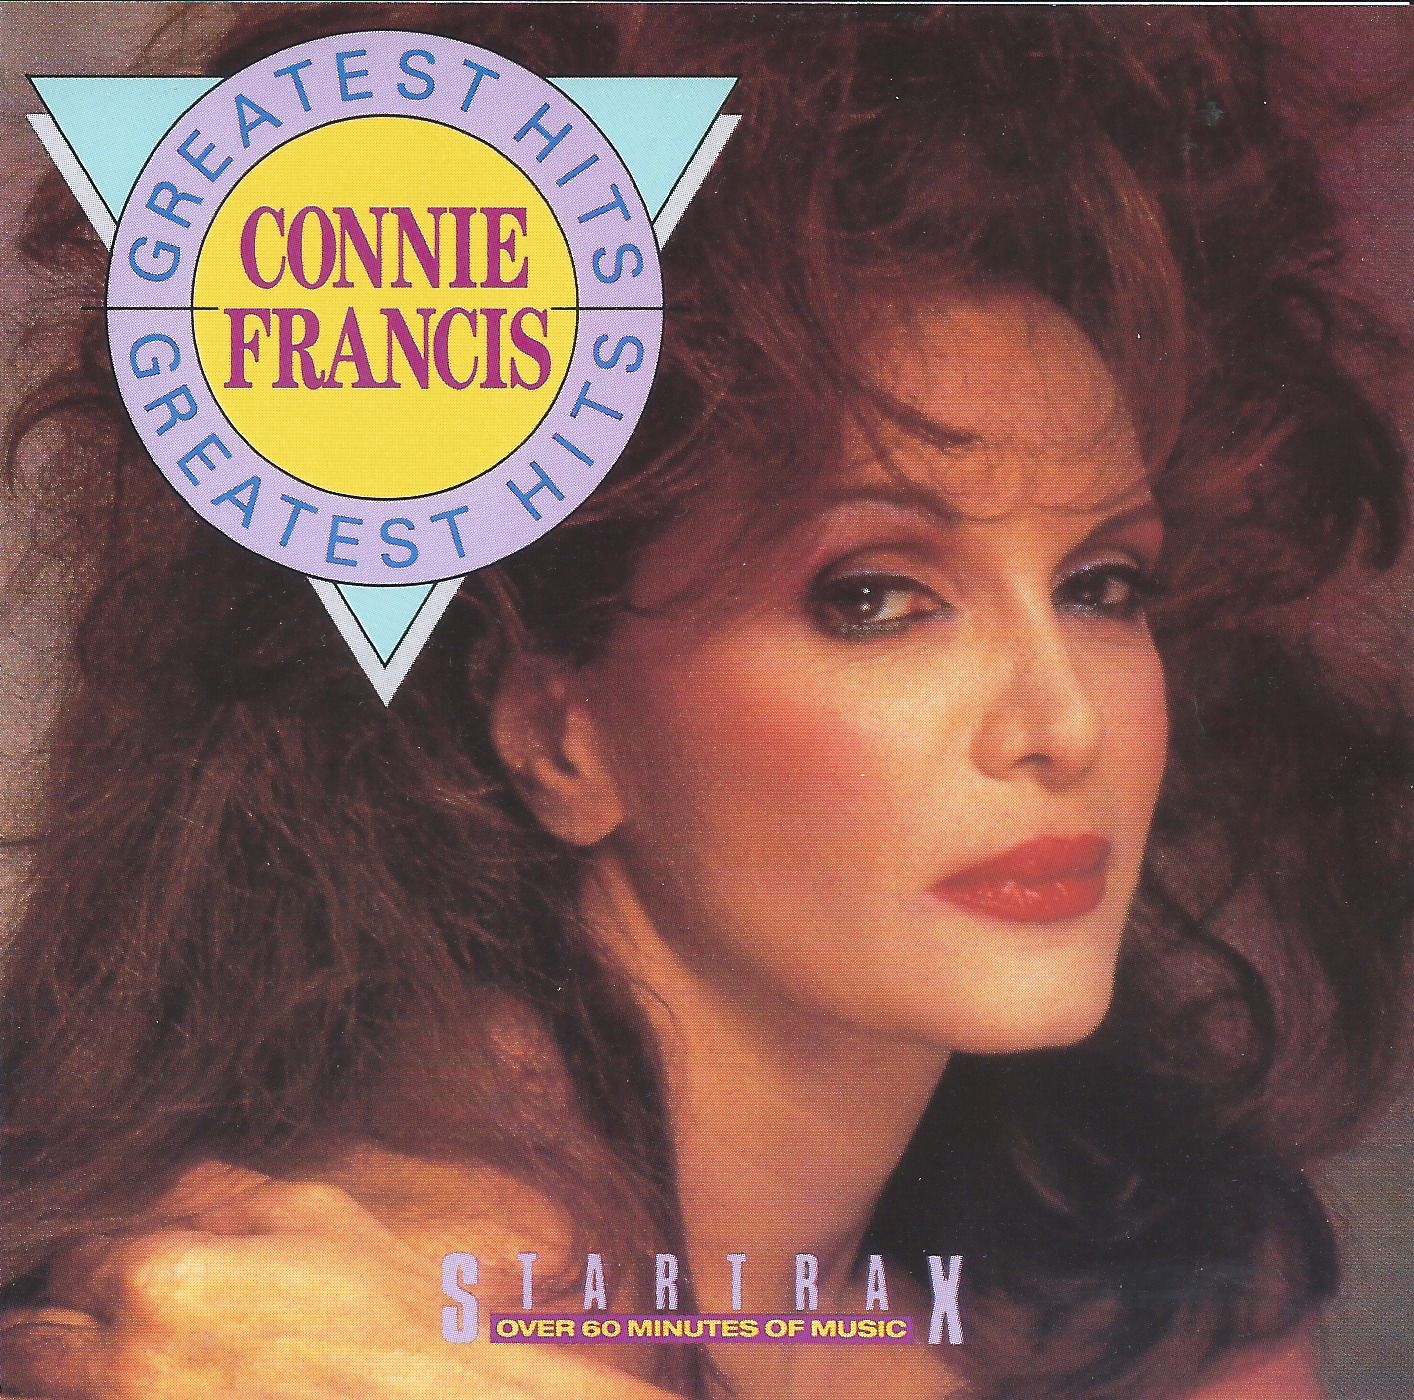 Connie Francis: Greatest Hits album art